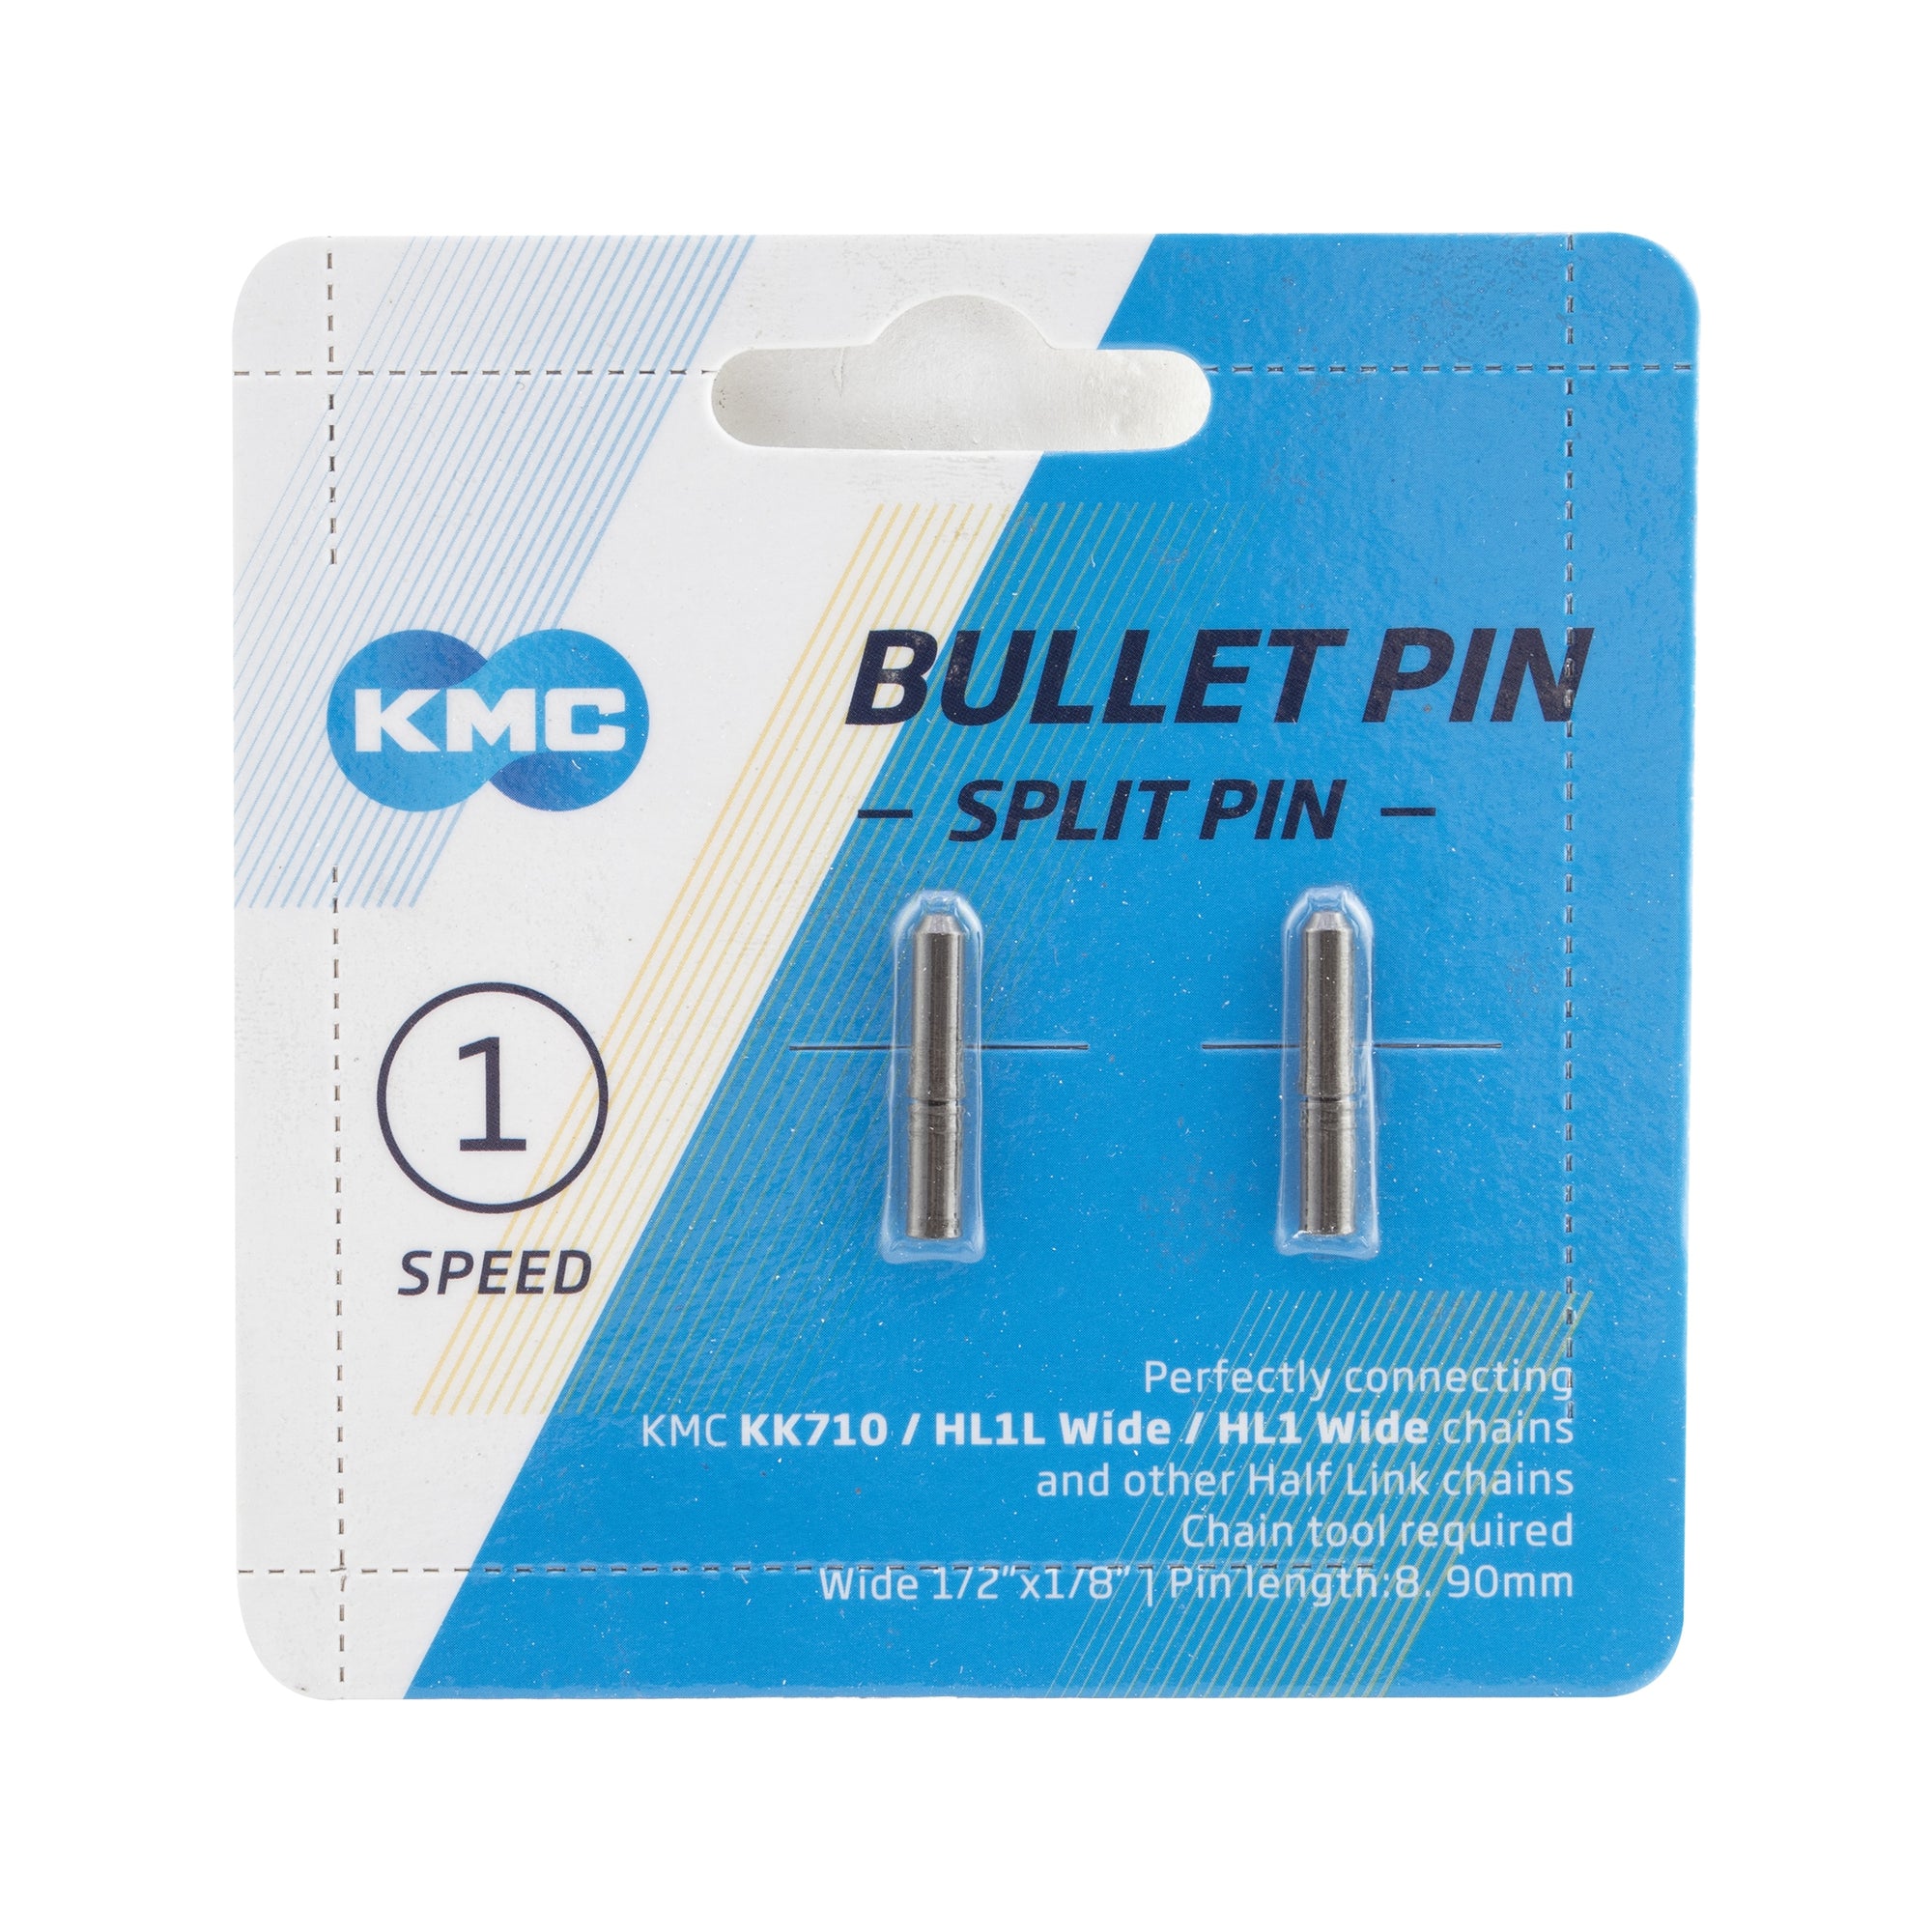 KMC Bullet Pin - Split Pin Chain Connector - Pkg of 2